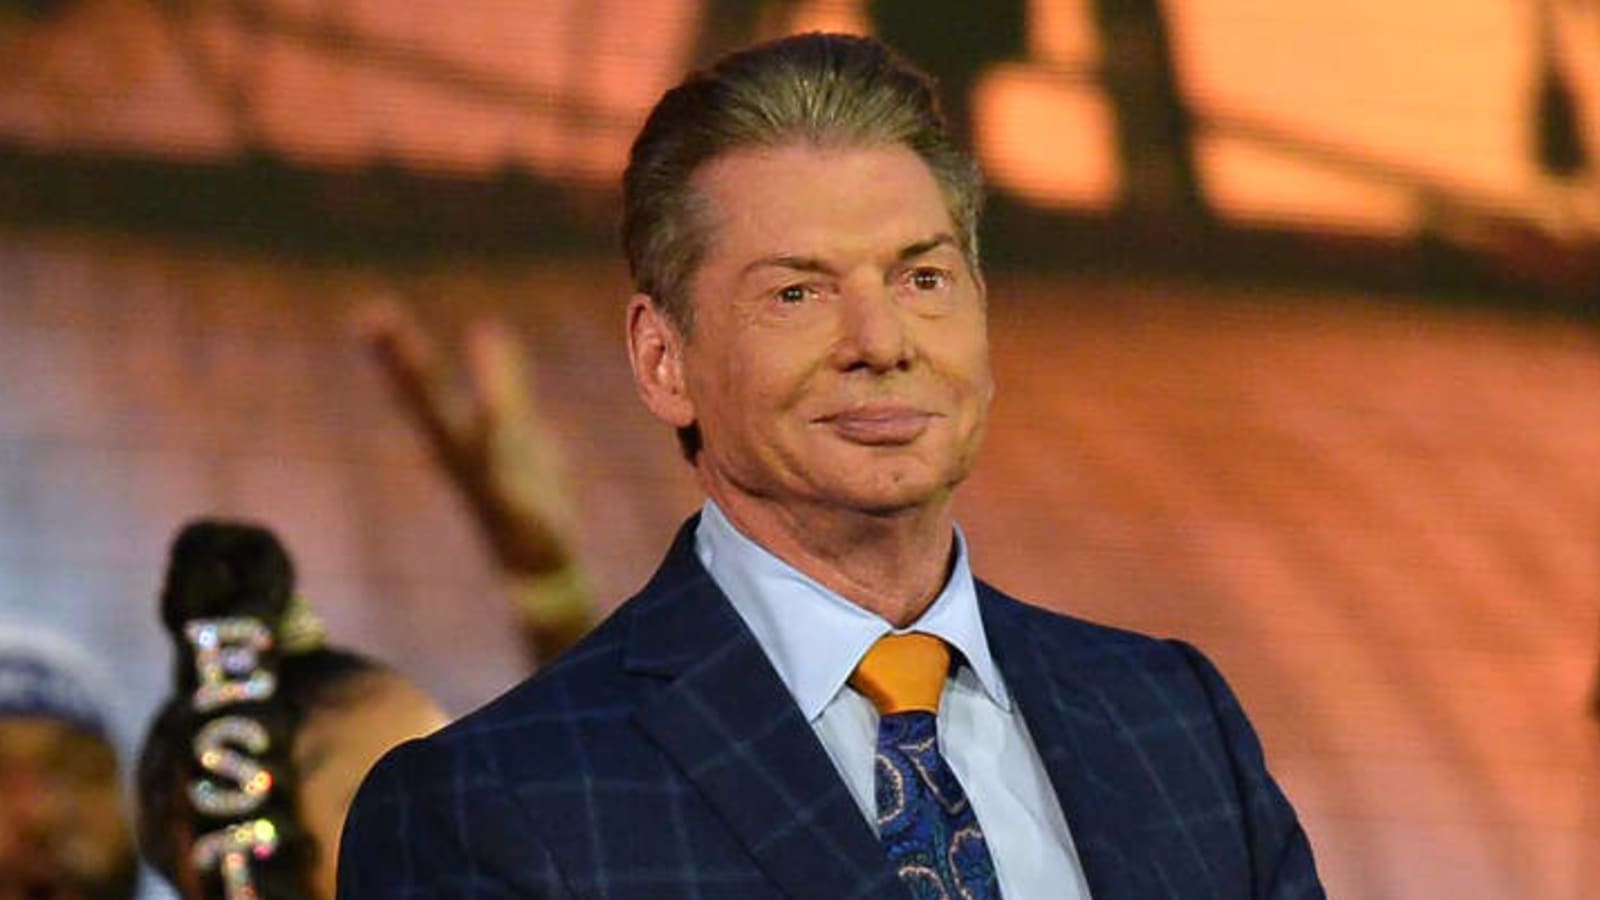 Vince McMahon under federal investigation